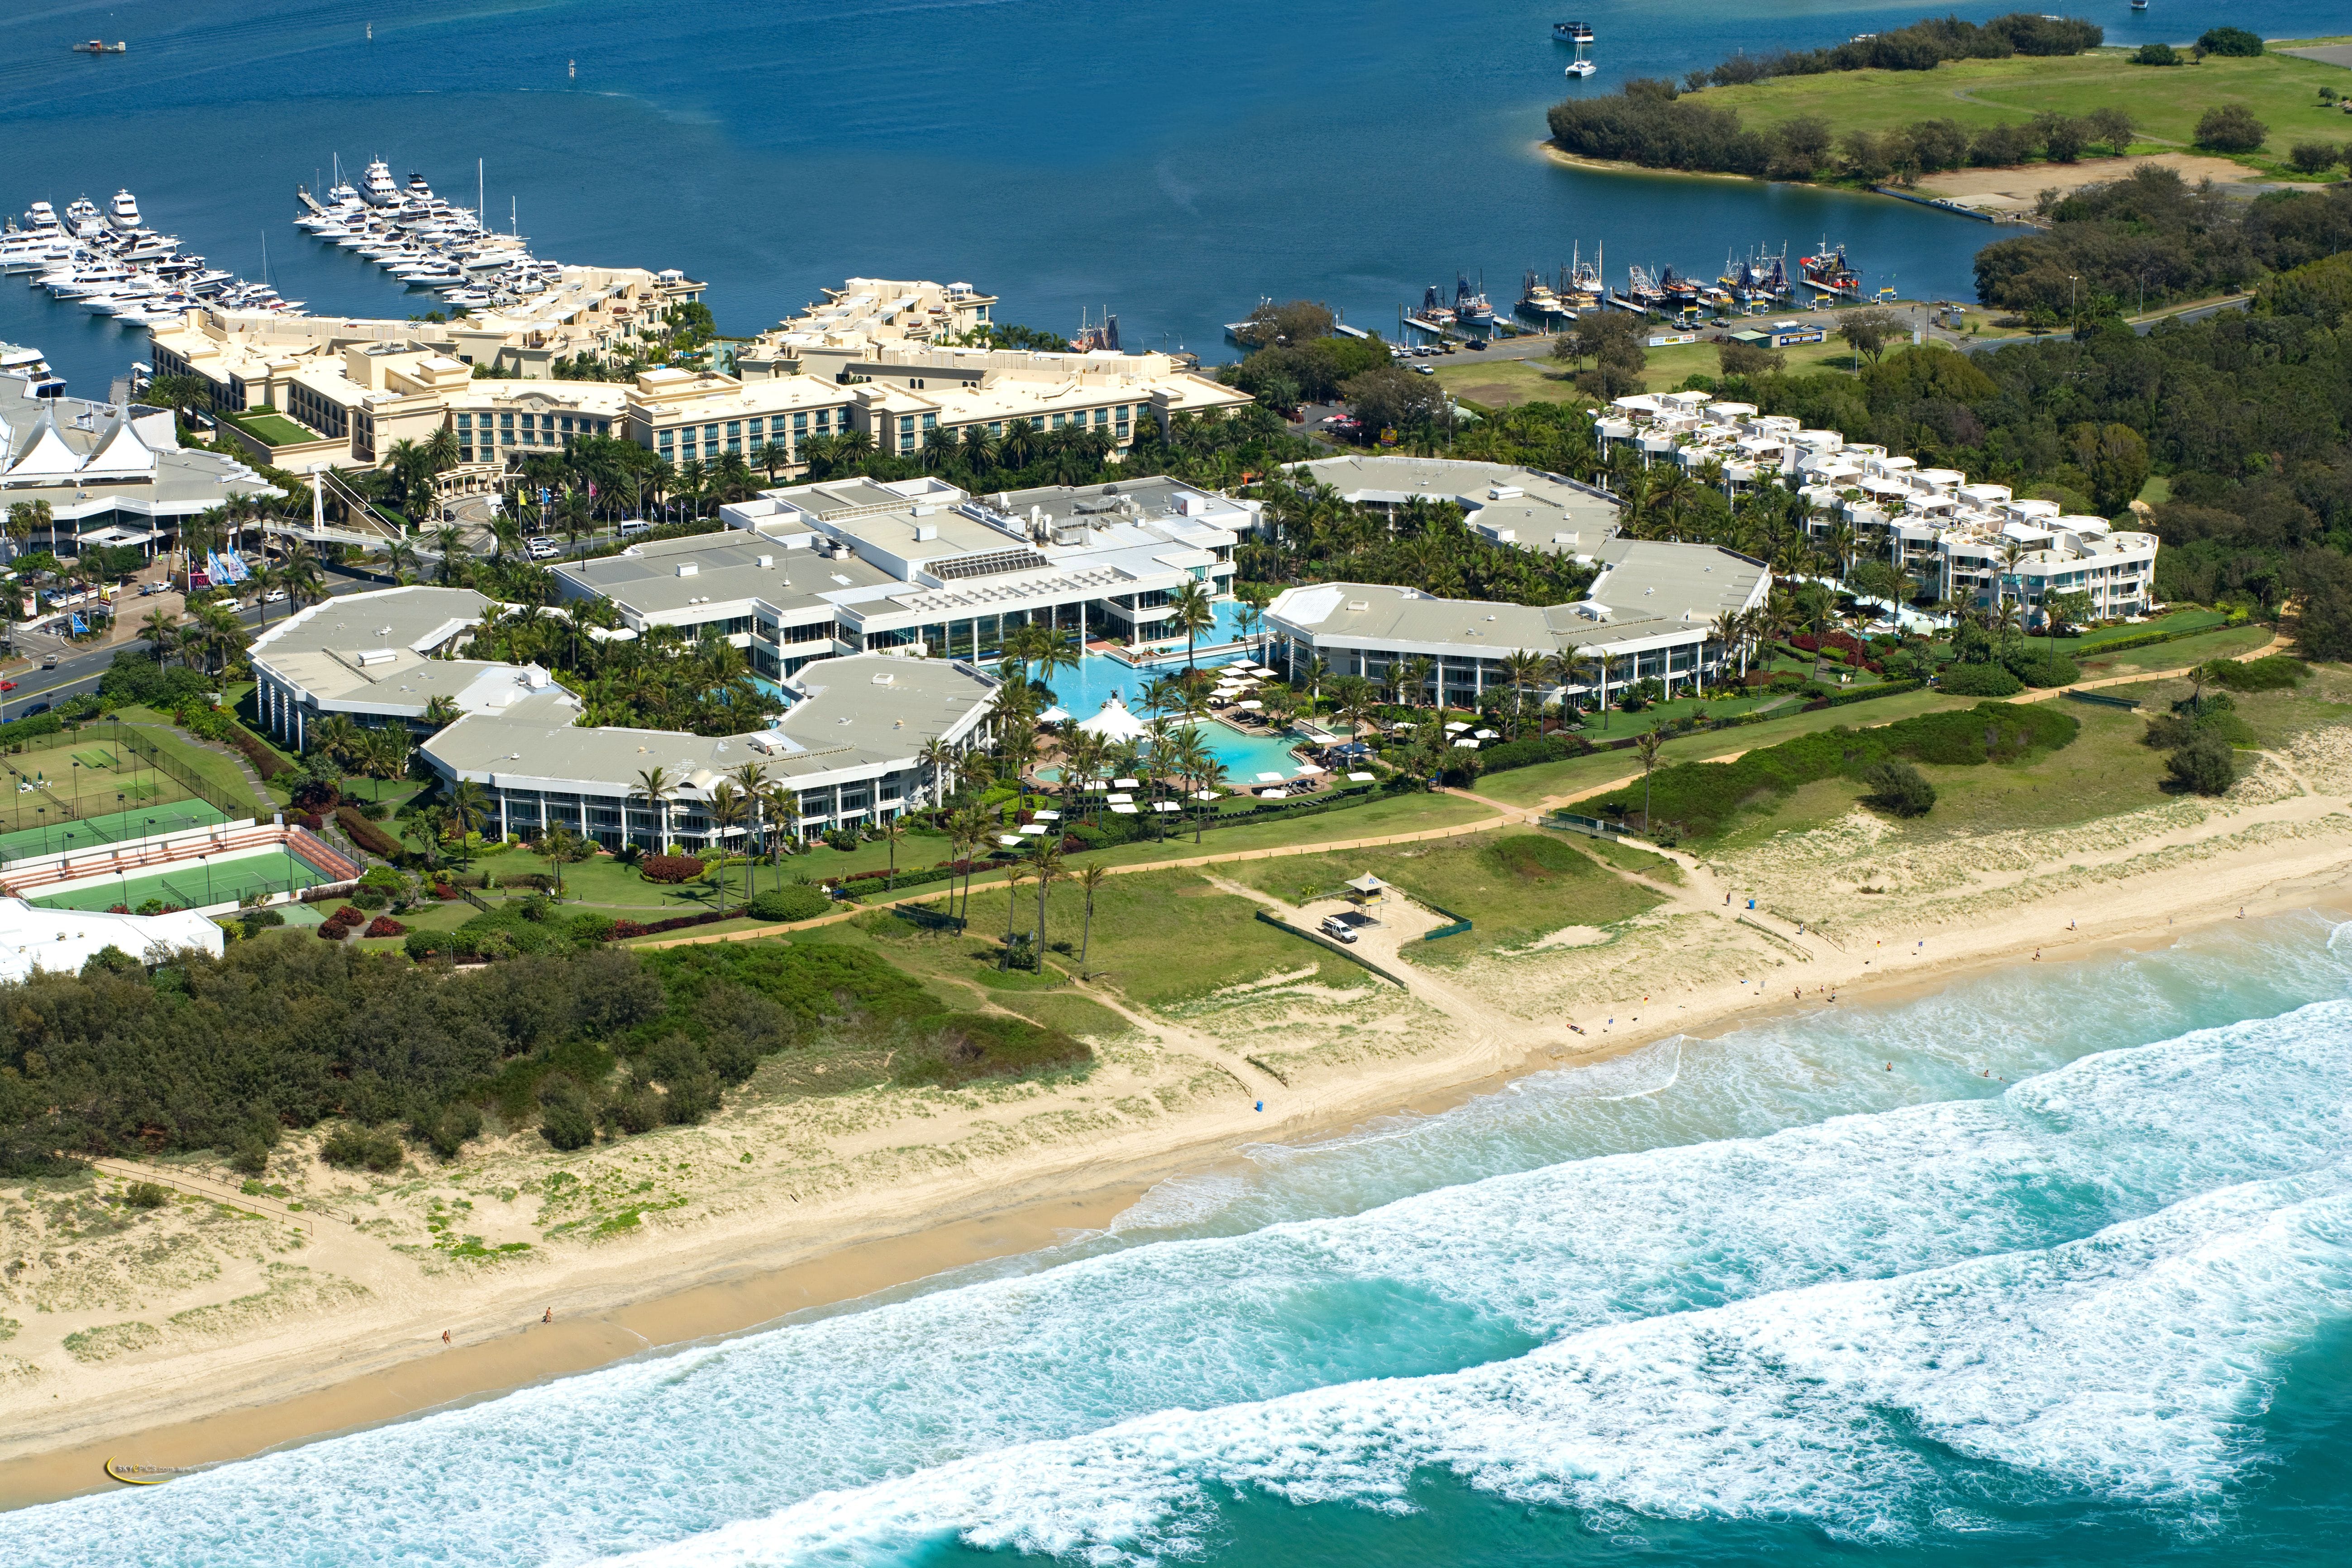 The Star seeking a $200m-plus sale of Sheraton Mirage amid Gold Coast hotel boom